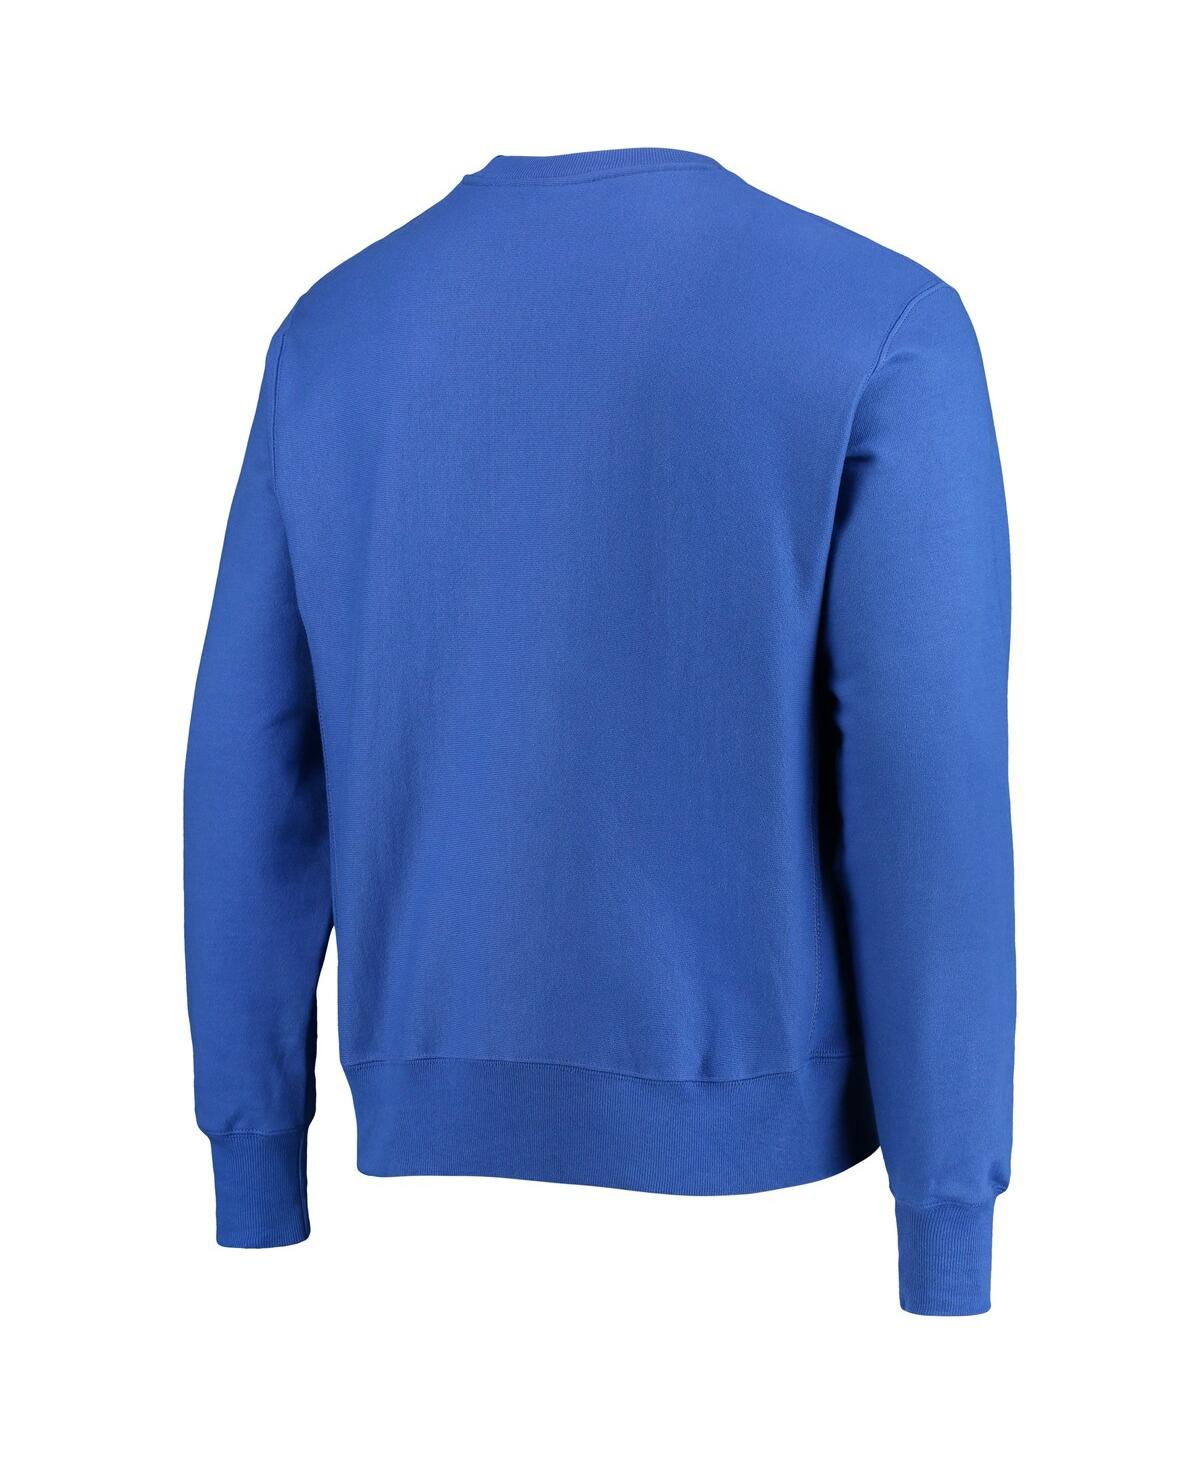 Shop Champion Men's  Royal Pitt Panthers Vault Logo Reverse Weave Pullover Sweatshirt